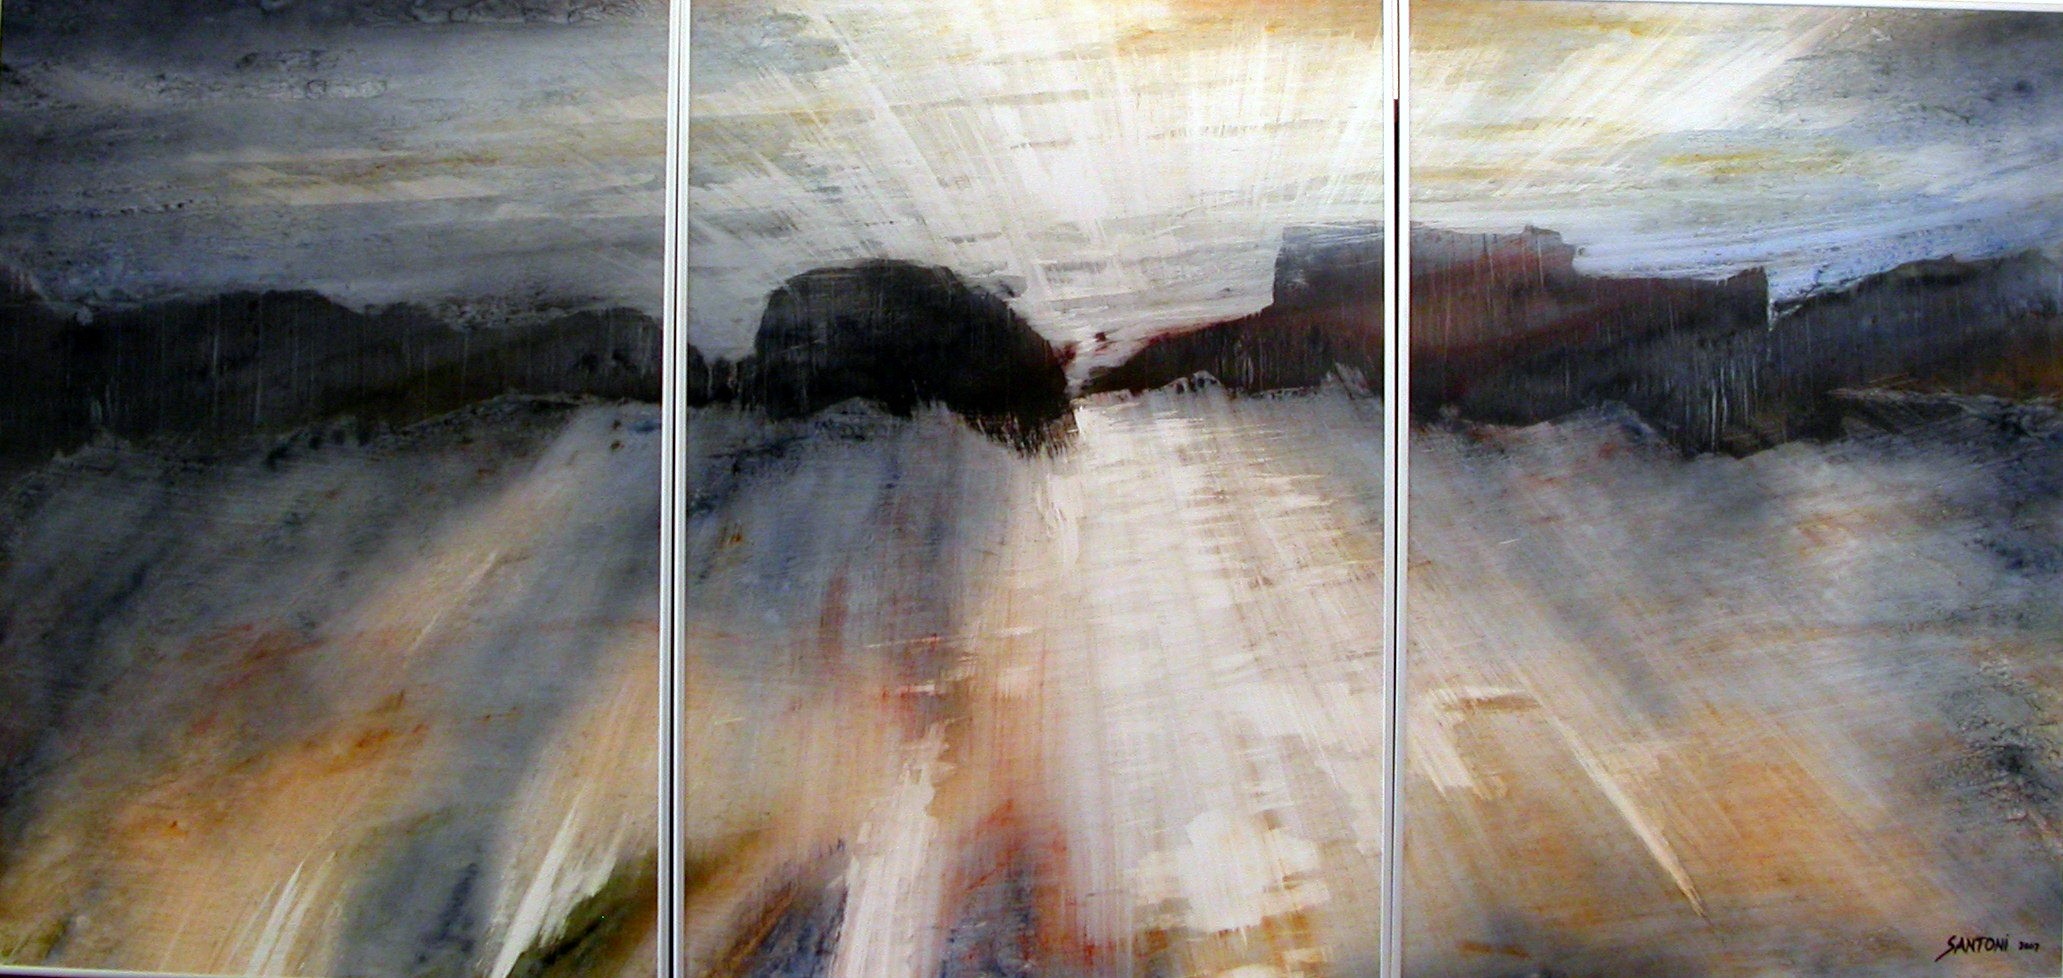 SAGA-W05, Santoni "Große Mystische Bergwelt" 2007